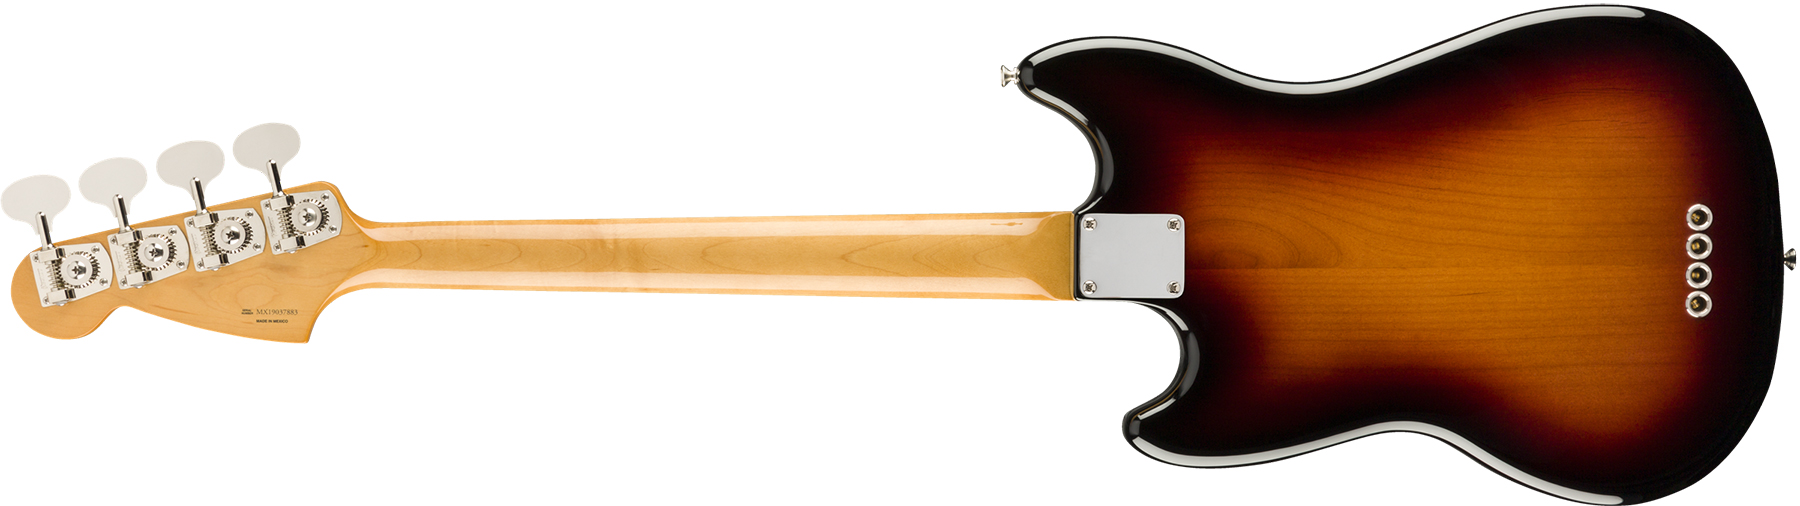 Fender Mustang Bass 60s Vintera Vintage Mex Pf - 3-color Sunburst - E-Bass für Kinder - Variation 1